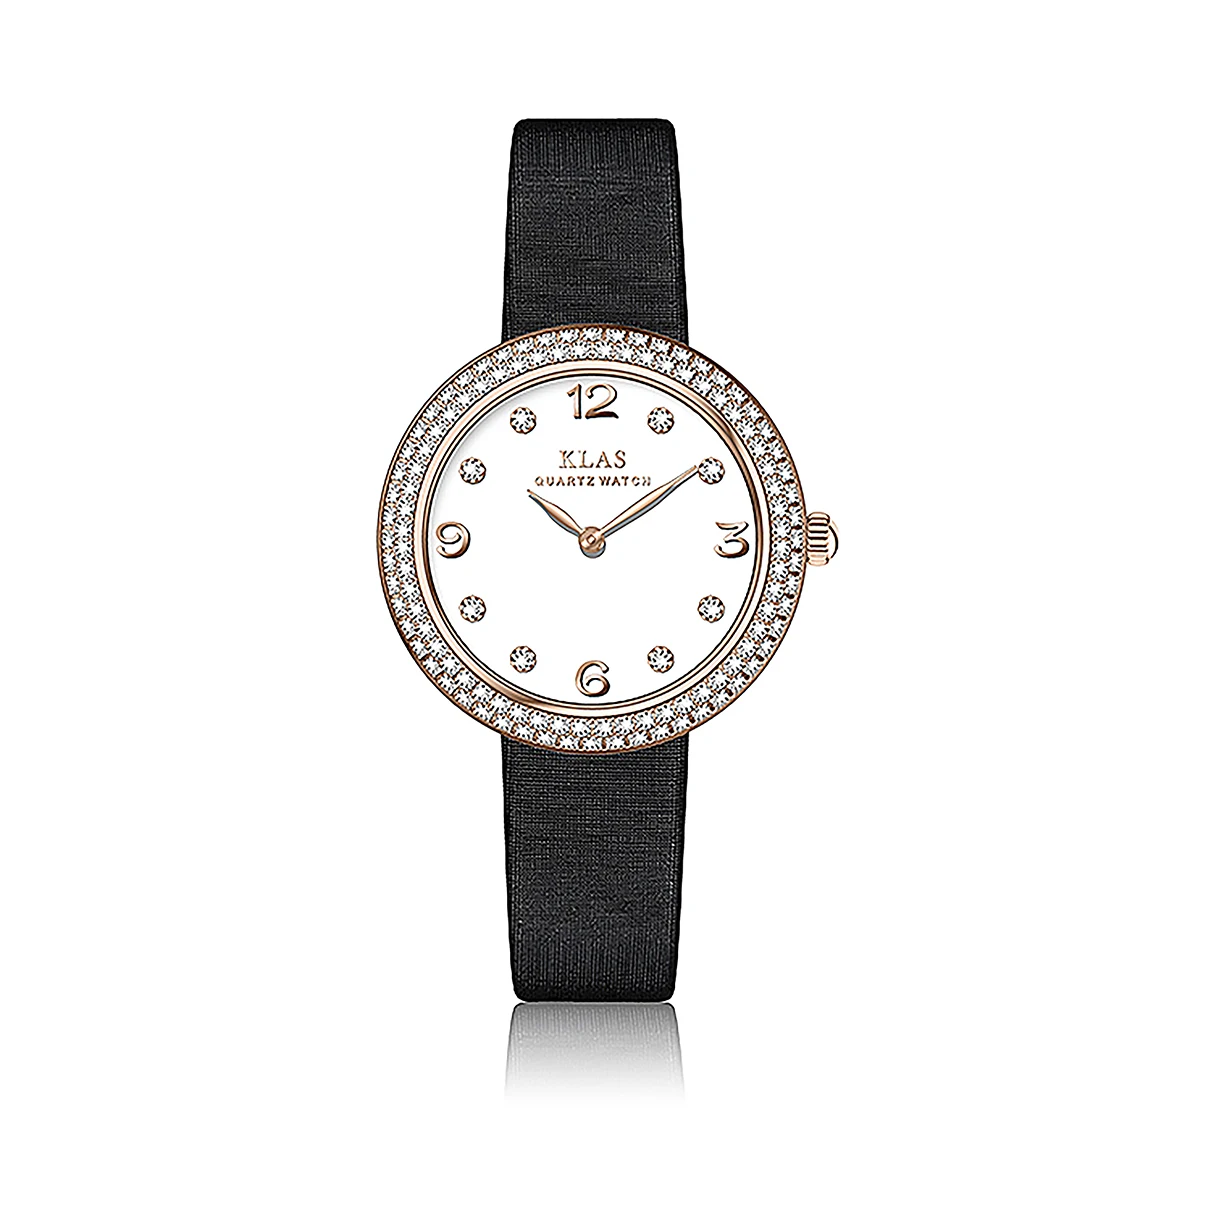 Ladies wrist watch case contains reflector ring 100 gems KLAS Brand enlarge